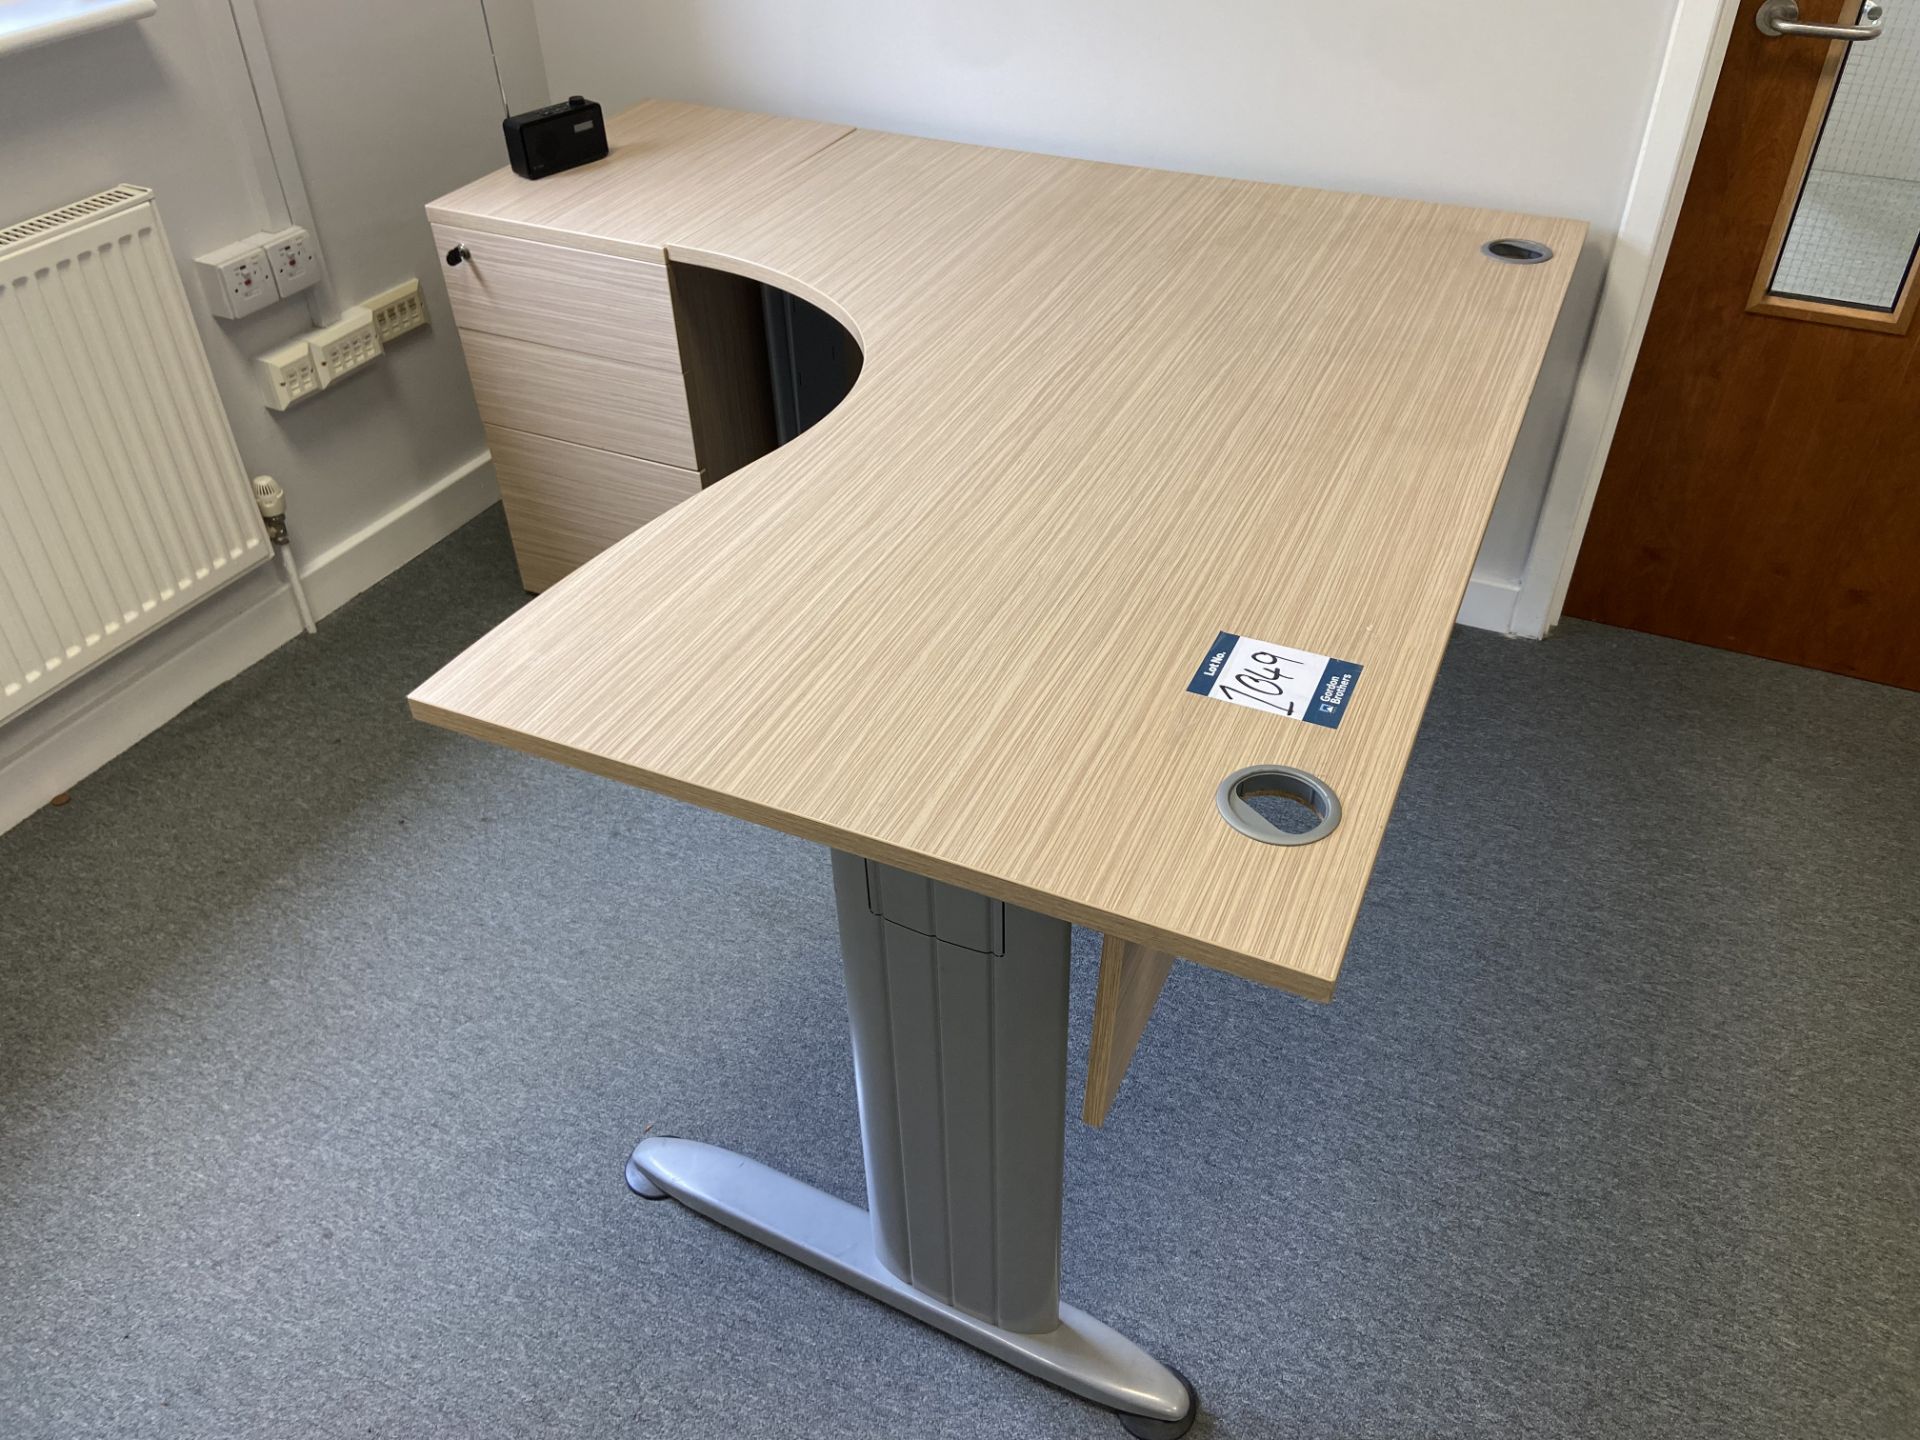 Lot comprisng: one corner desk, three 3 drawer high pedestals & one book case shelving unit (all